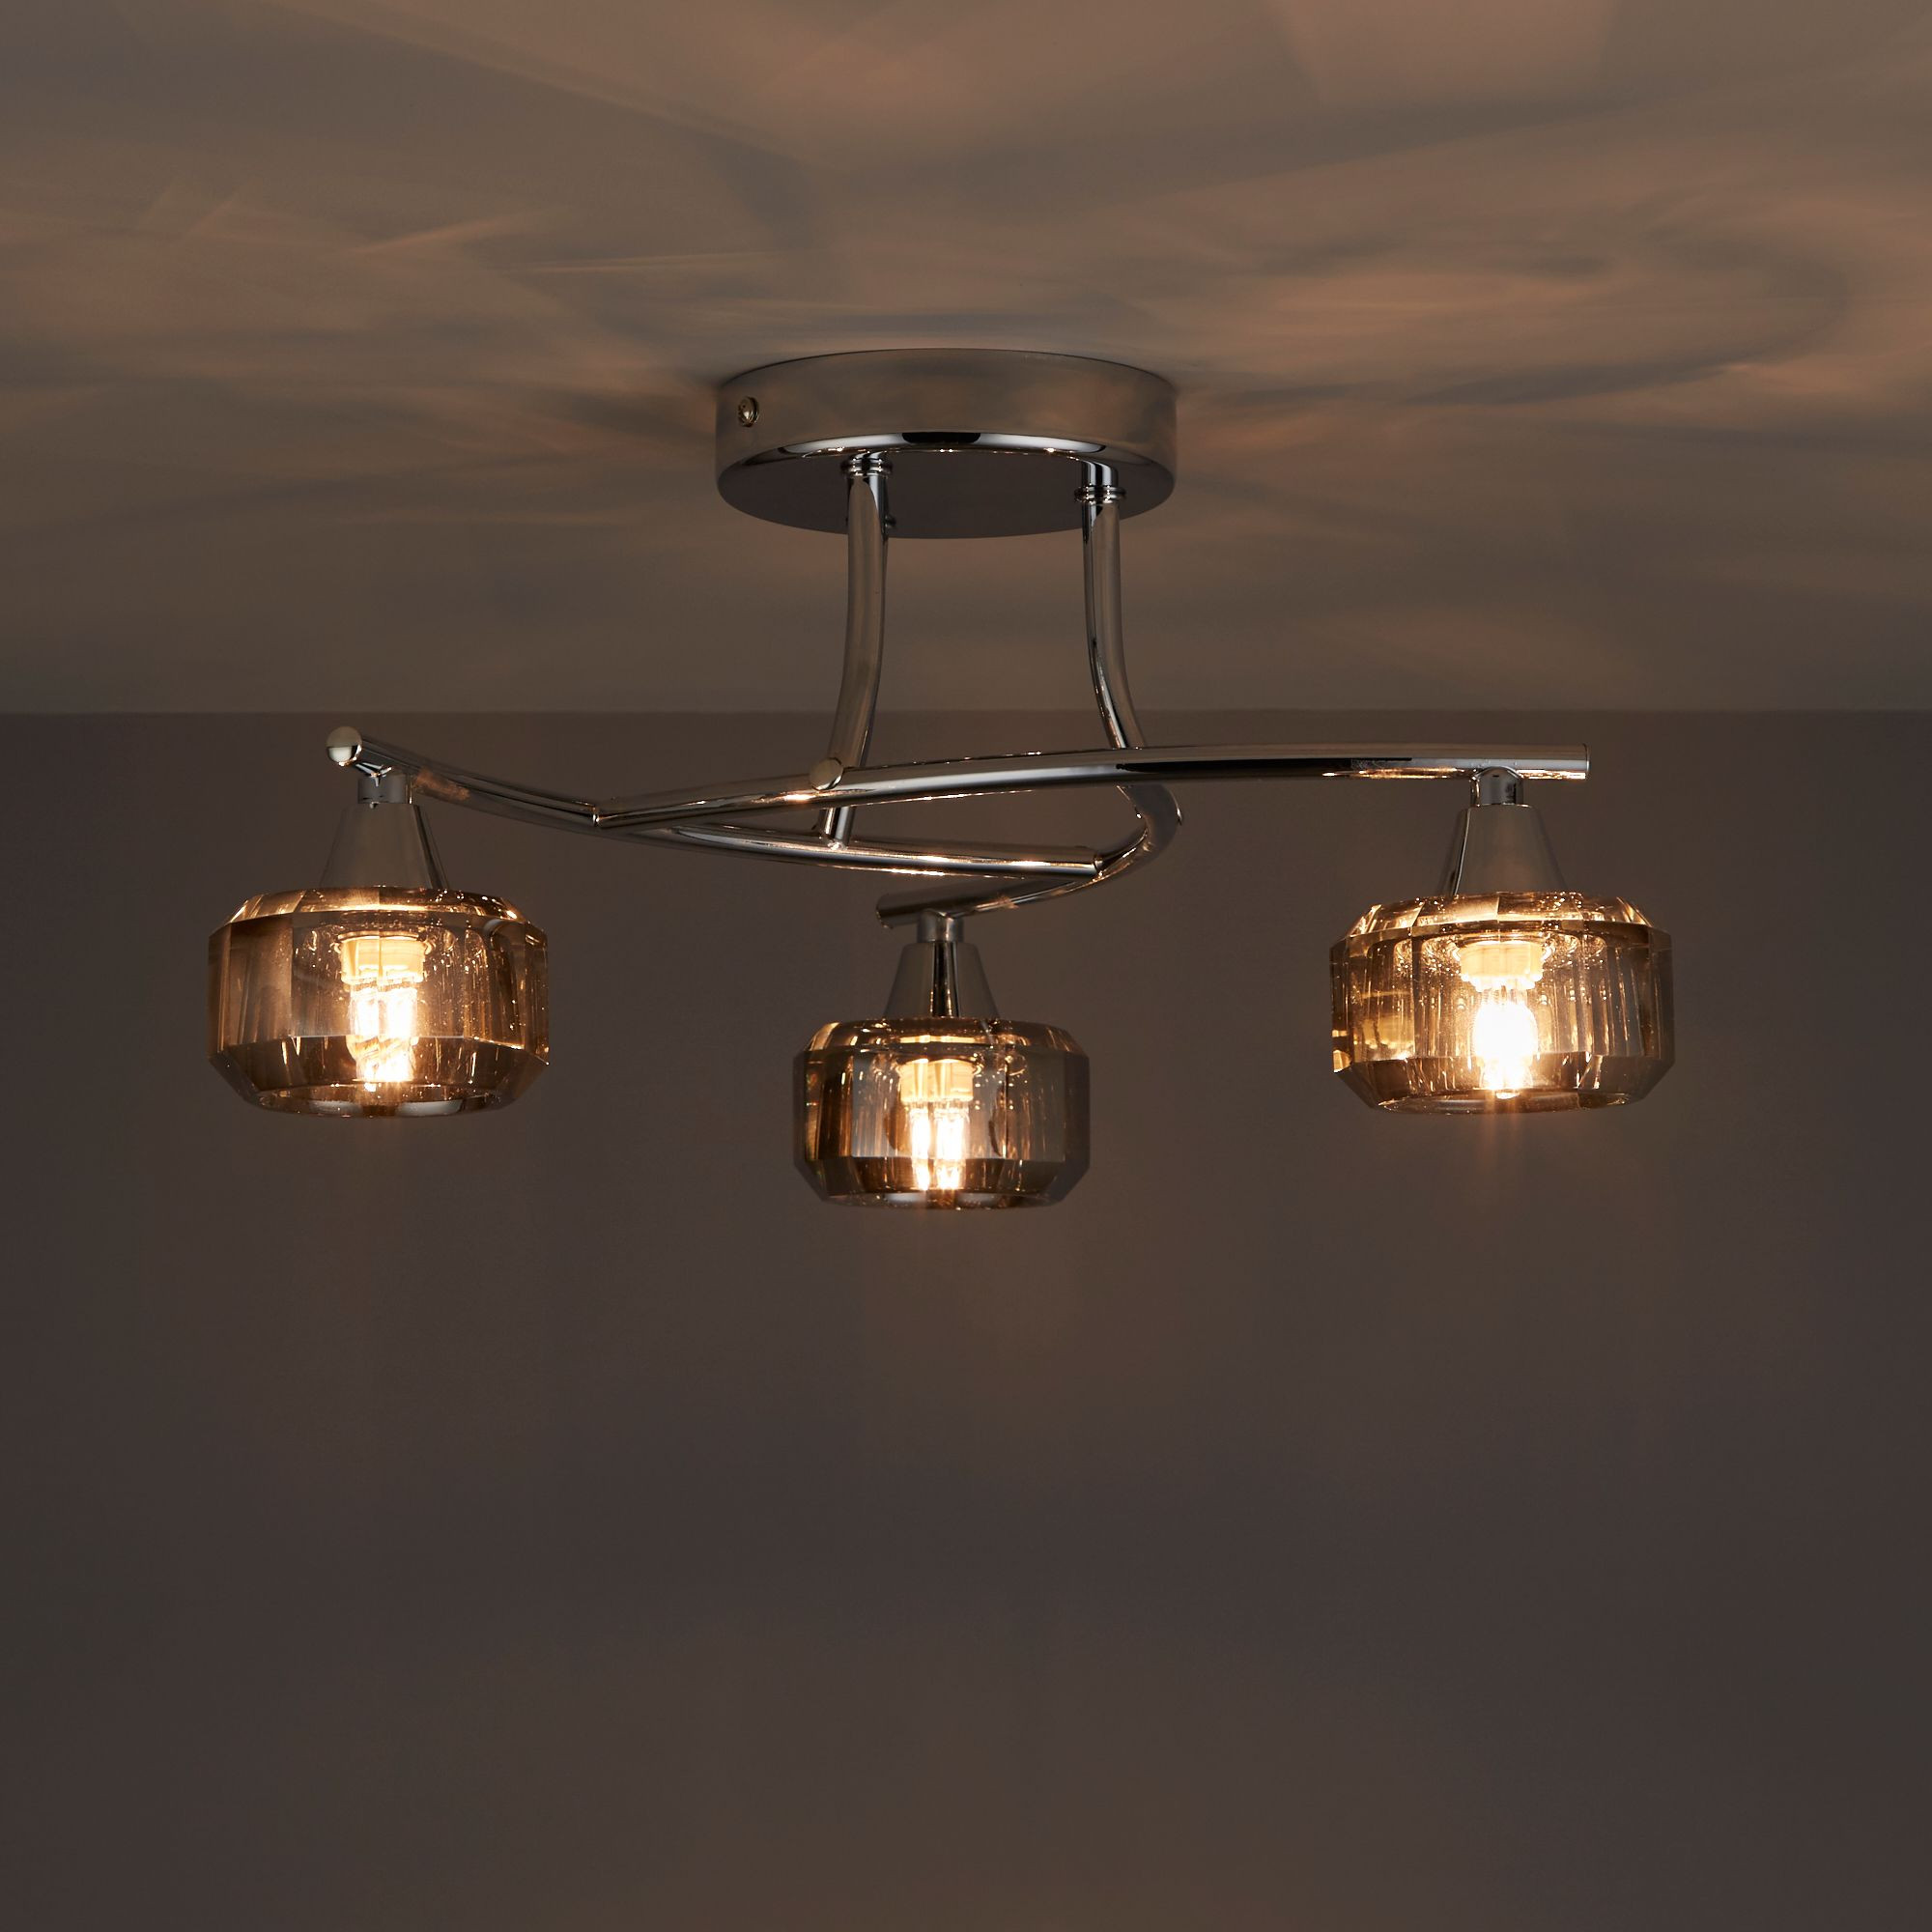 Best ideas about DIY Ceiling Light Fixtures
. Save or Pin Ceiling Glass Light Fixture DIY Lights and Lamps Now.